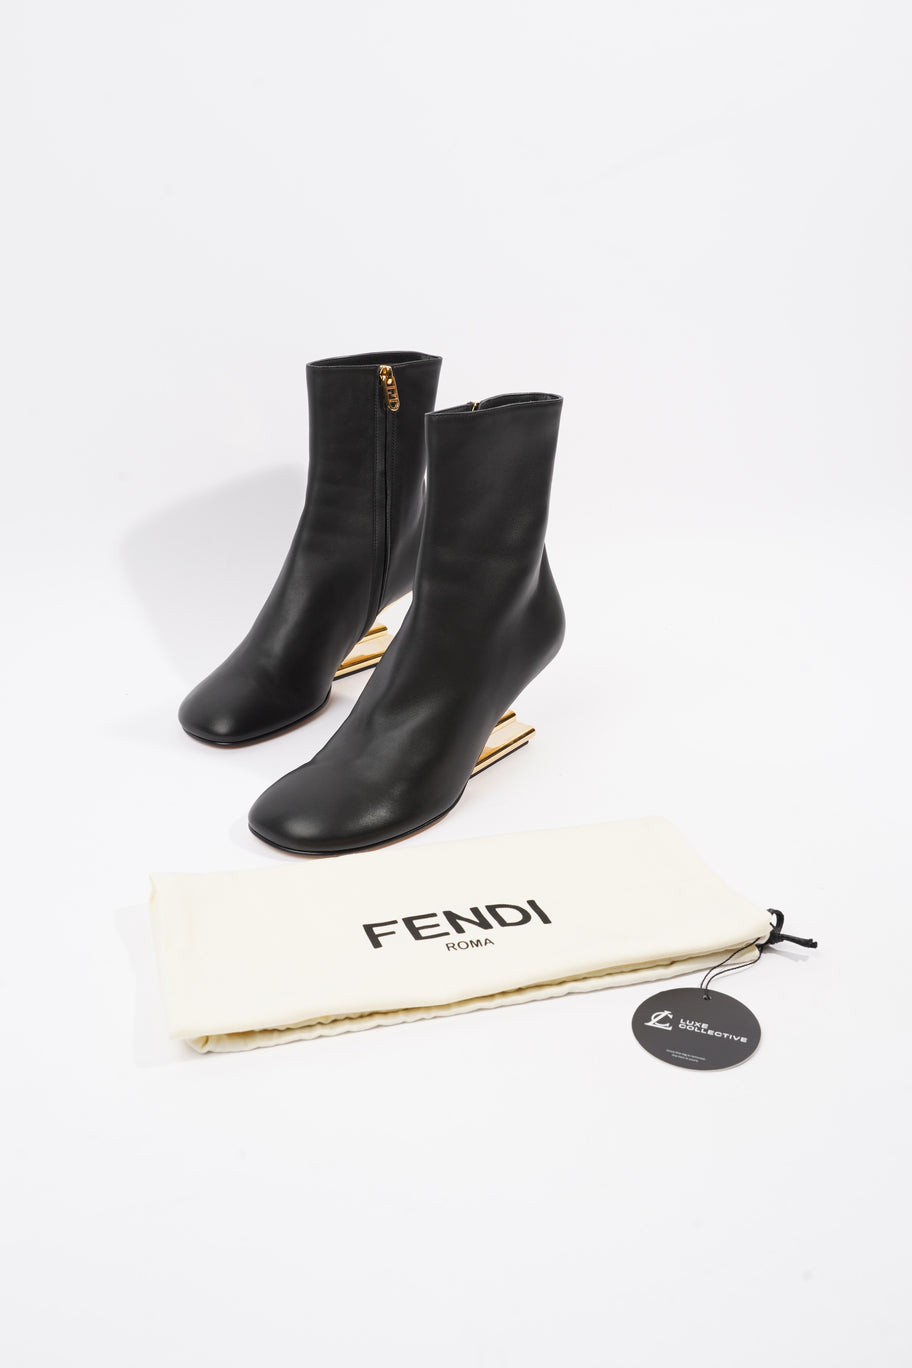 Fendi First Boots Black Leather EU 39 UK 6 Image 10